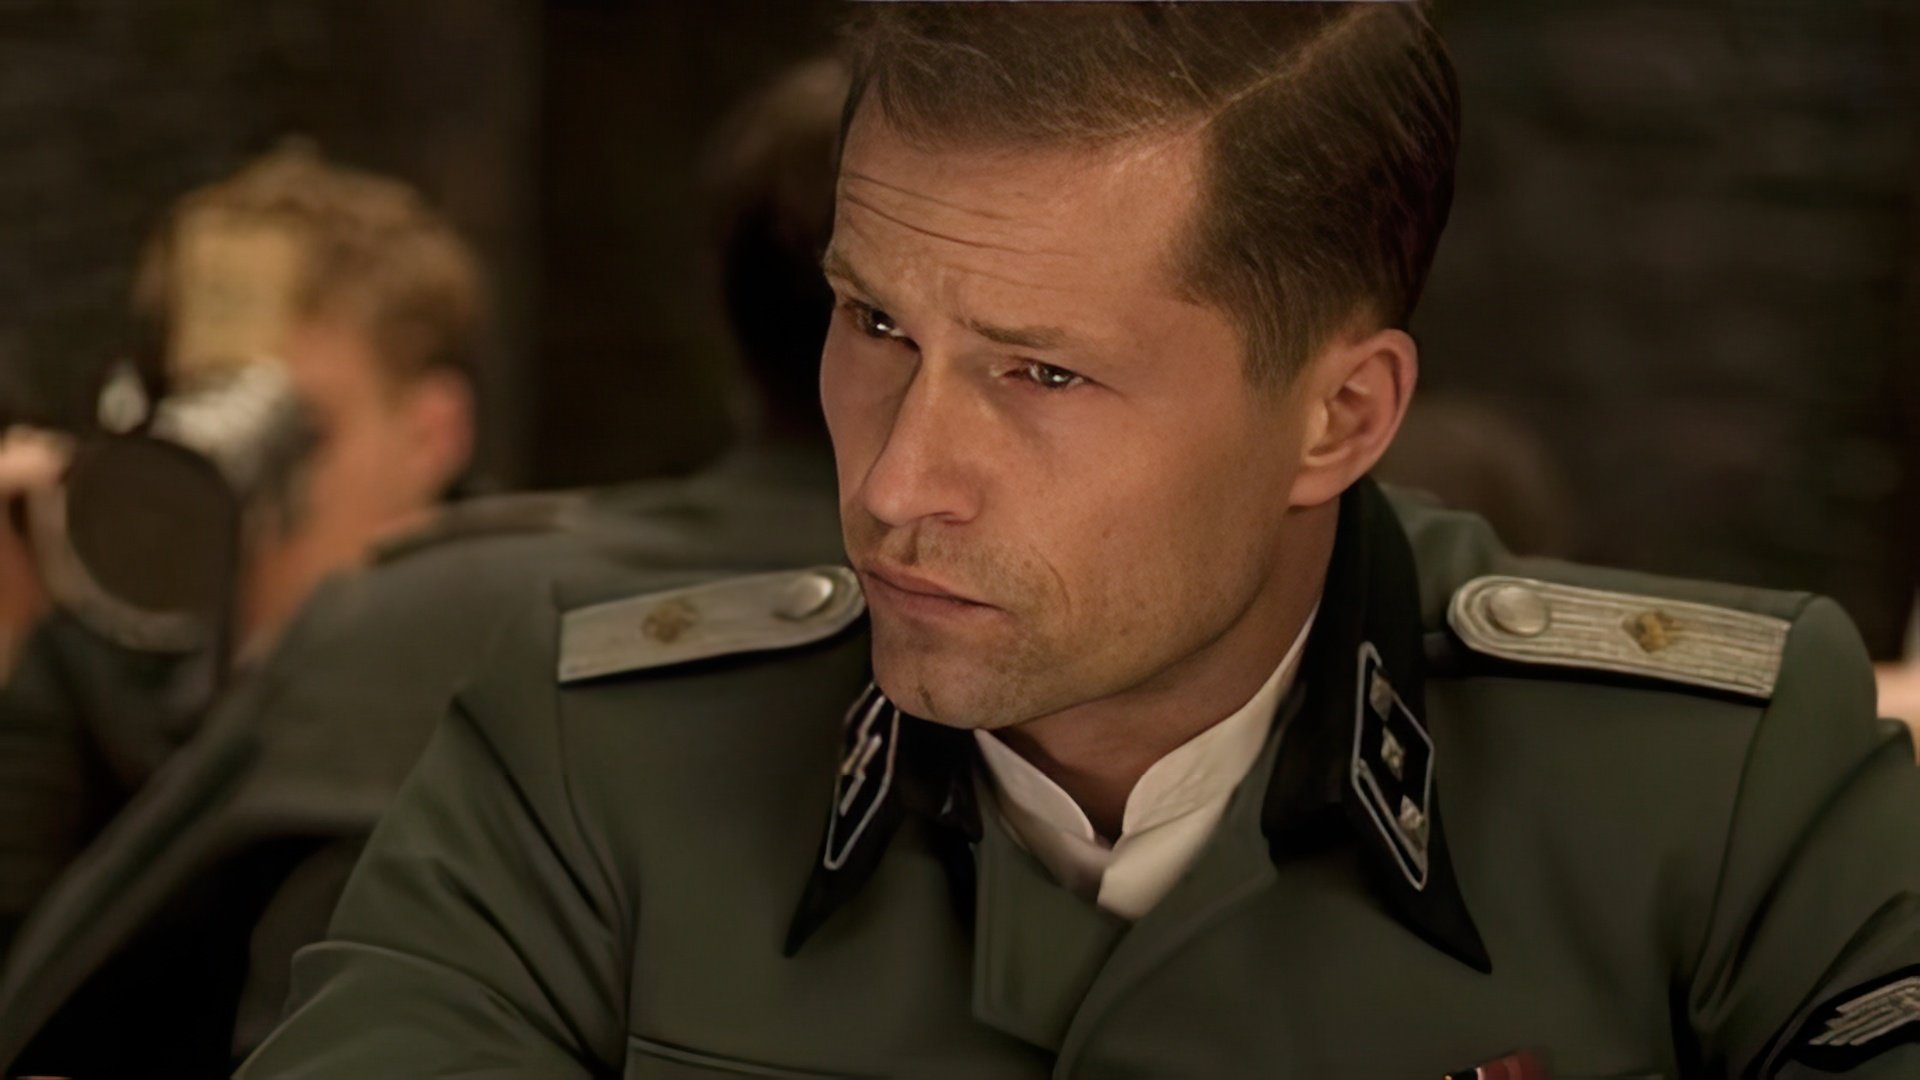 Til Schweiger flatly refused all roles portraying Nazi officers